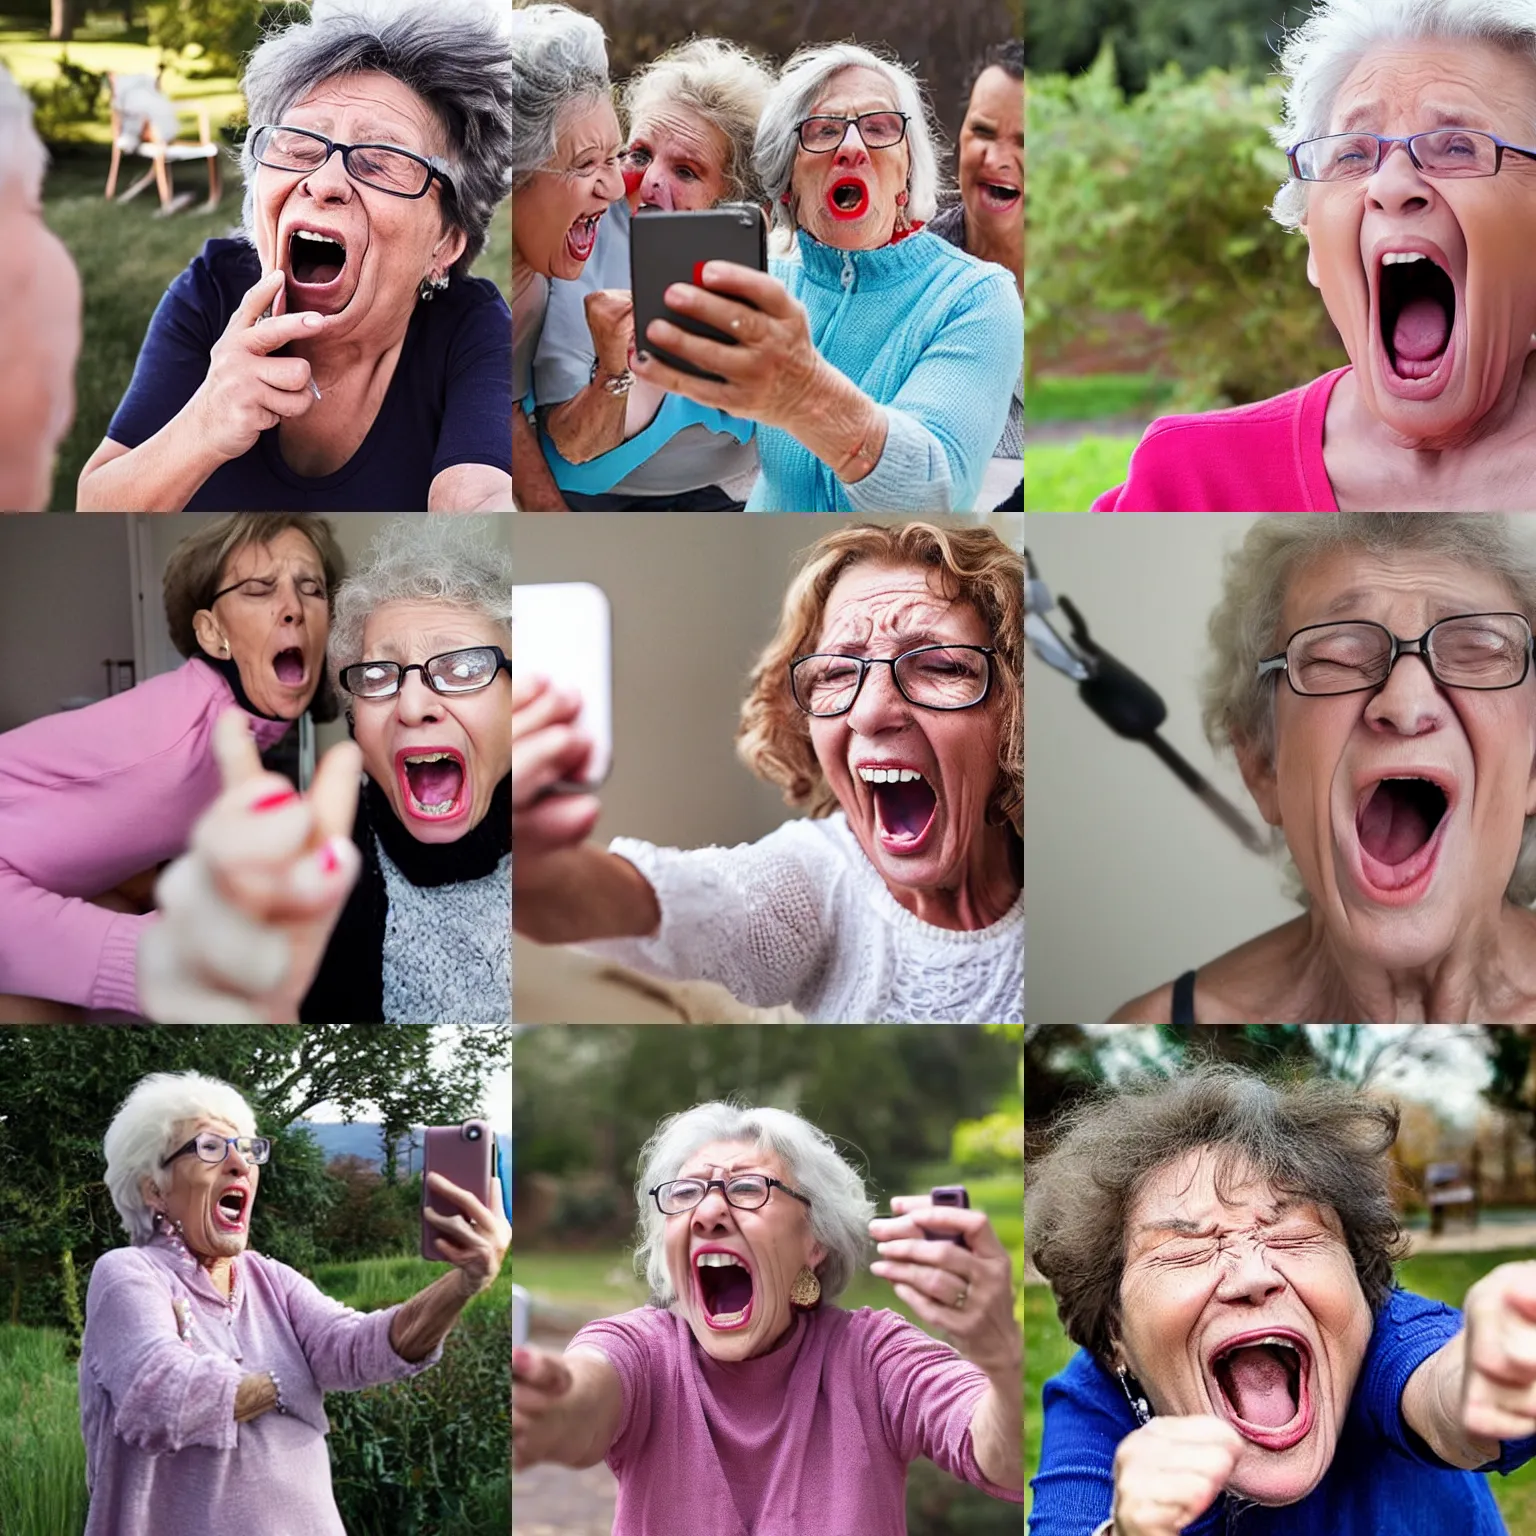 Prompt: a selfie of a grandma screaming